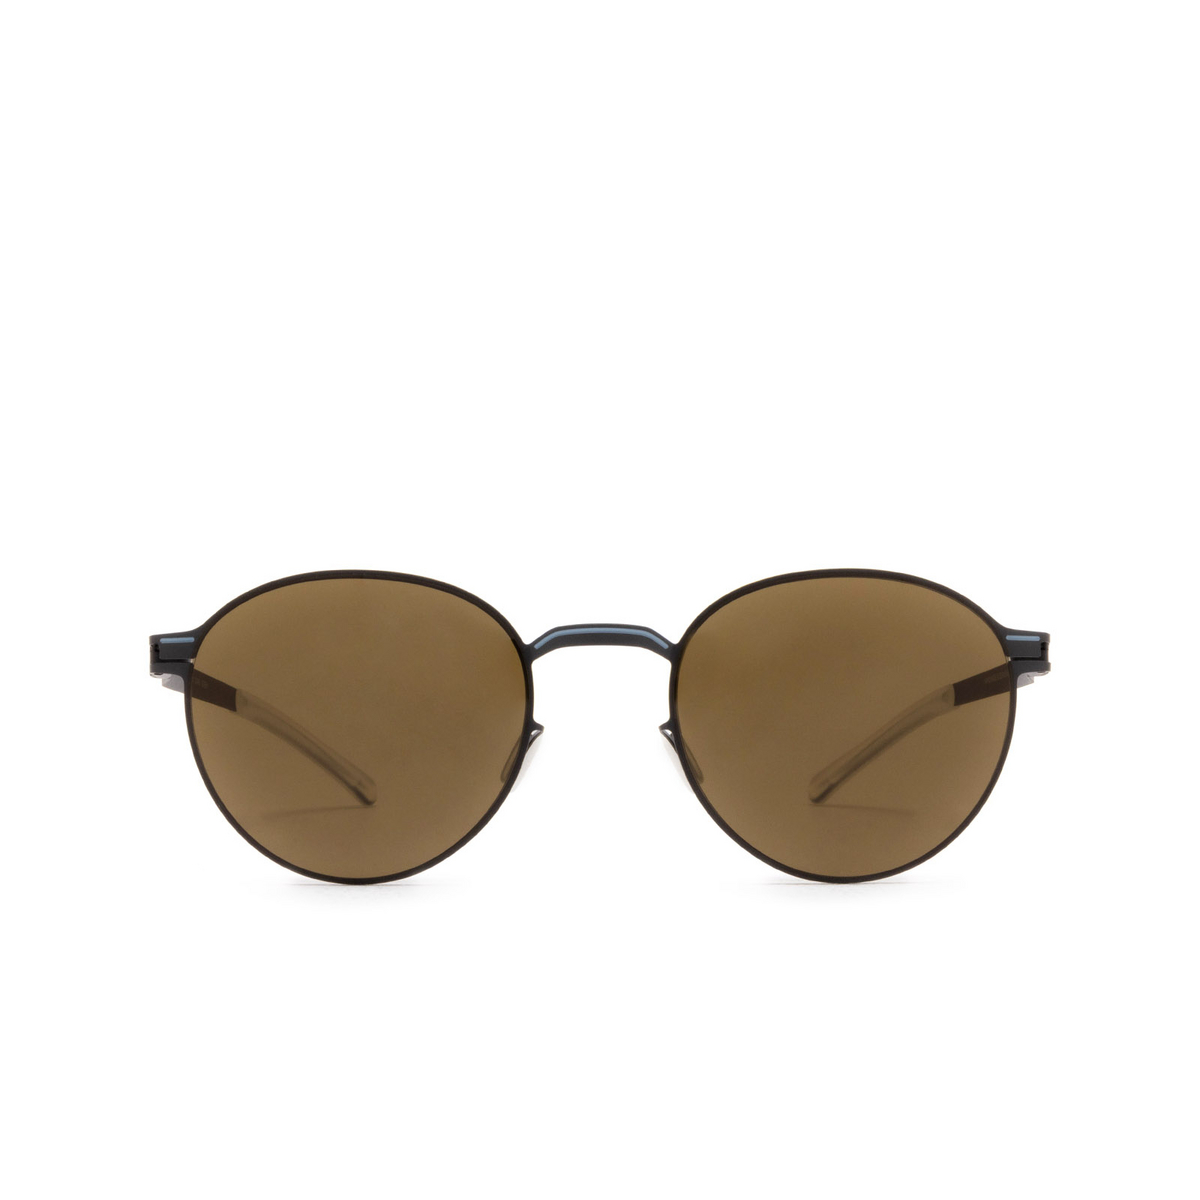 Mykita CARLO Sunglasses 475 Storm Grey/Blue Grey - front view